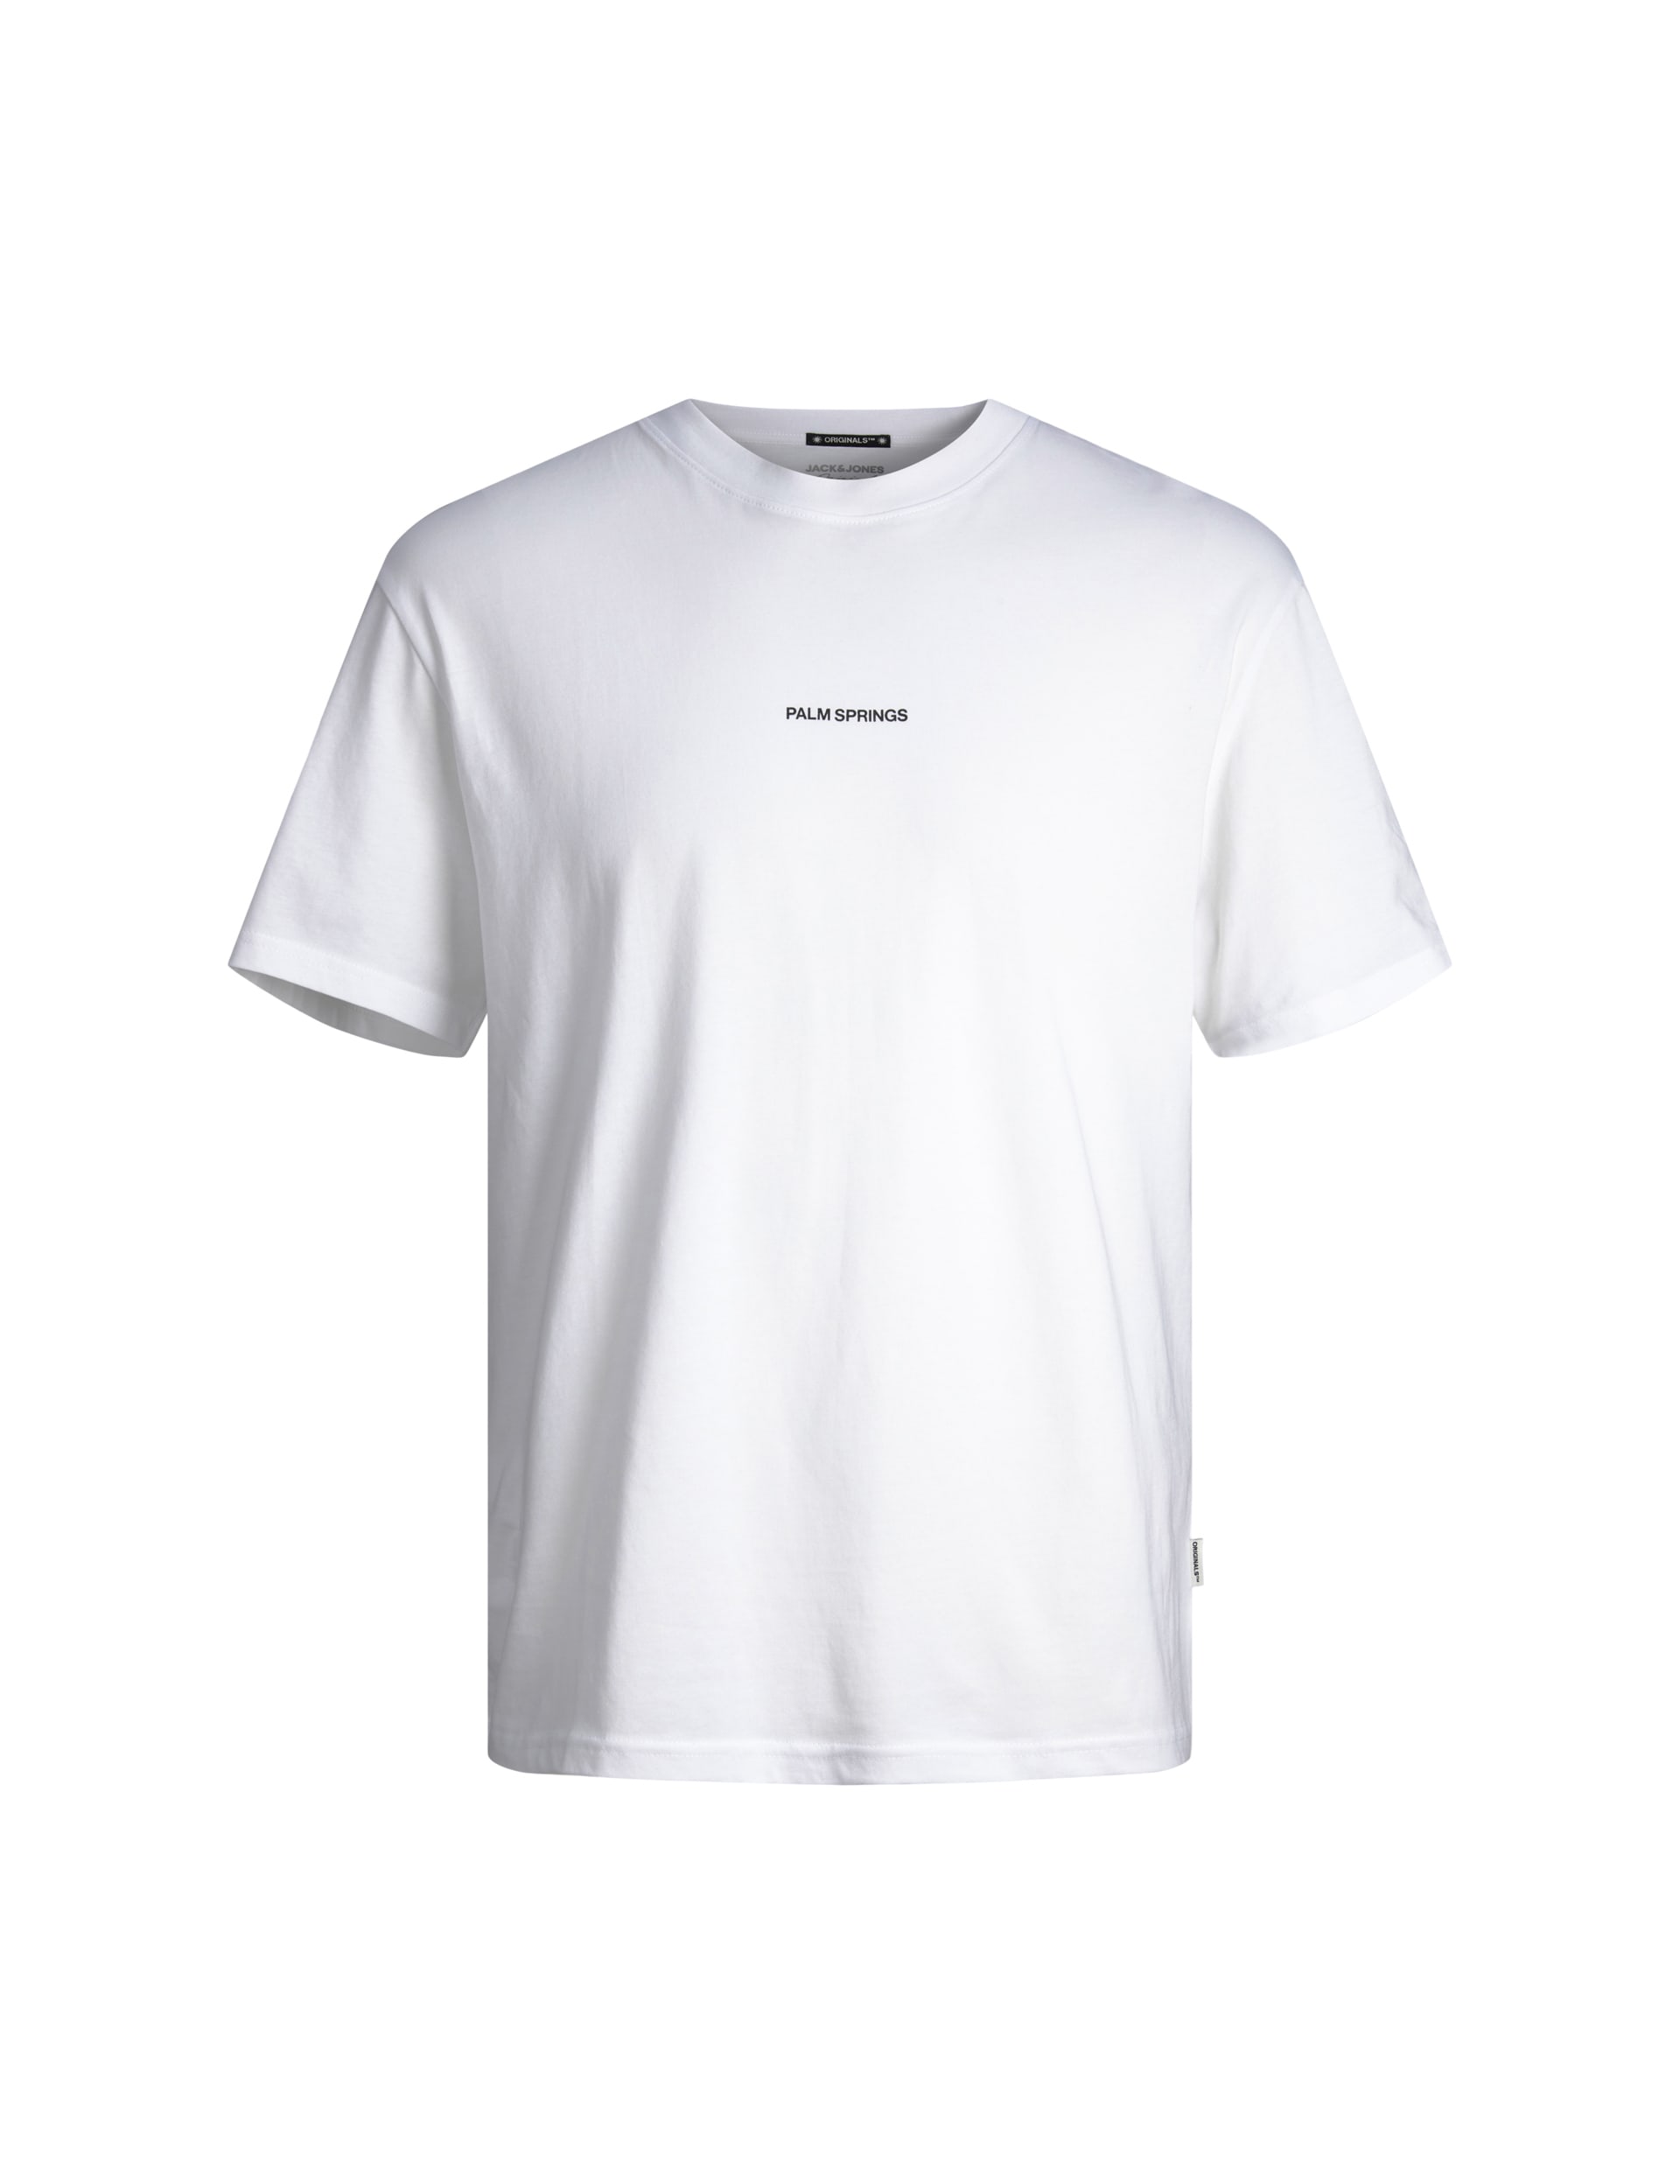 Pure Cotton Back Print T-Shirt (8-16 Yrs)